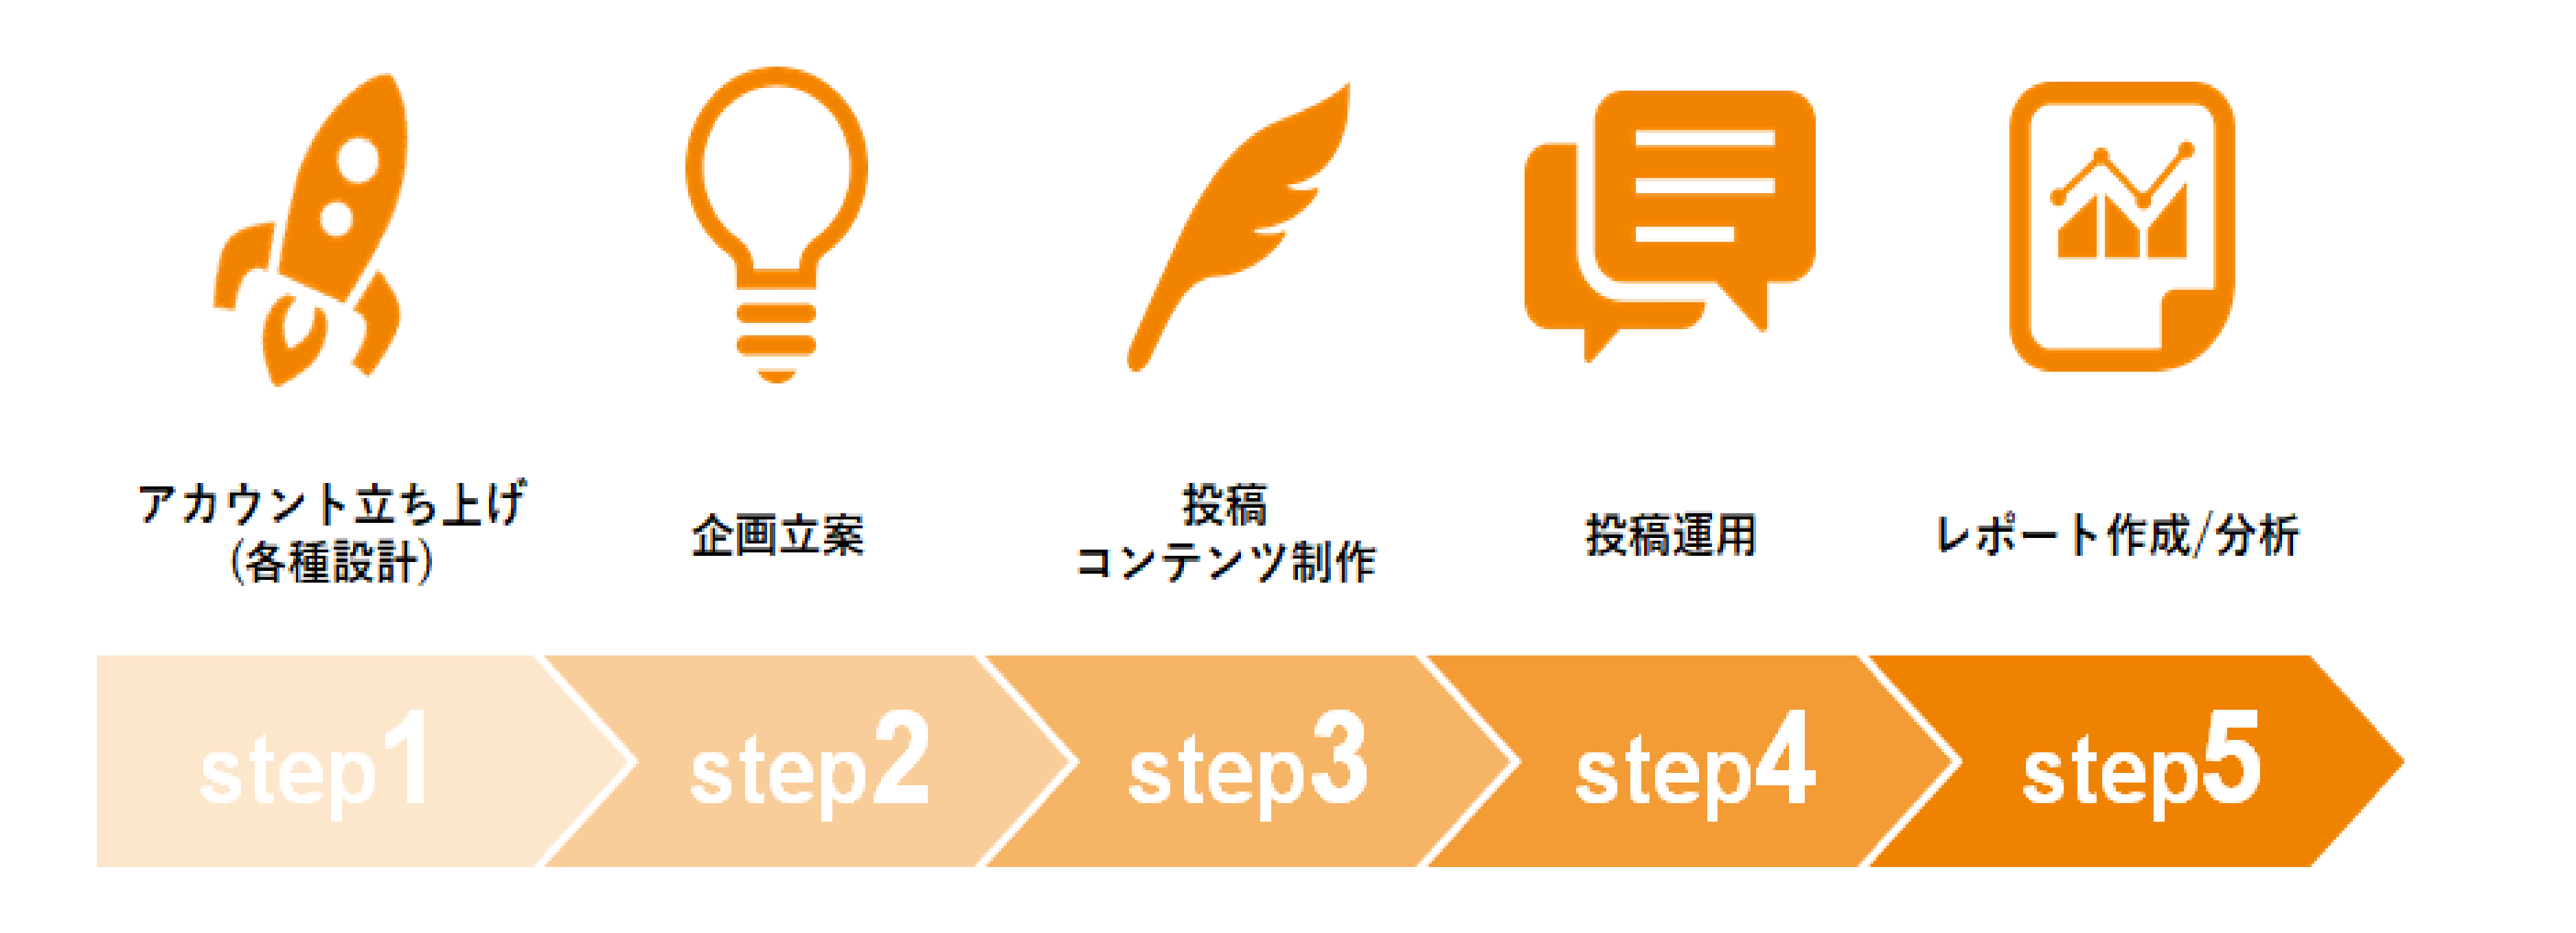 STEP1-5